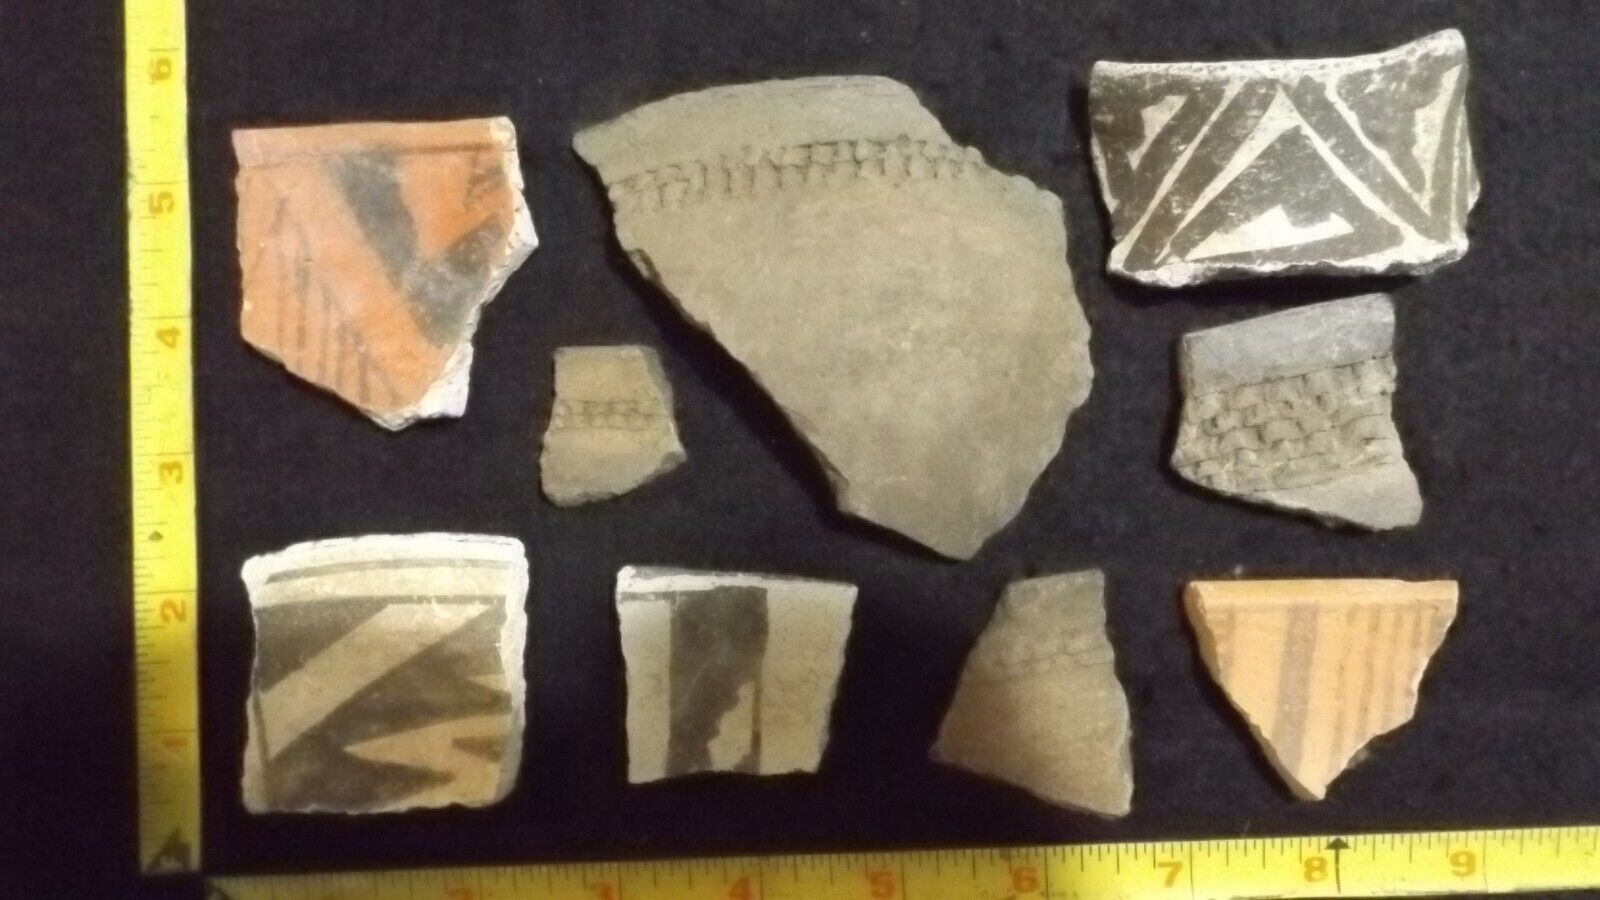 Authentic Arizona Anasazi Indian Pottery Rim Shards Artifacts *FREE SHIPPING AM3